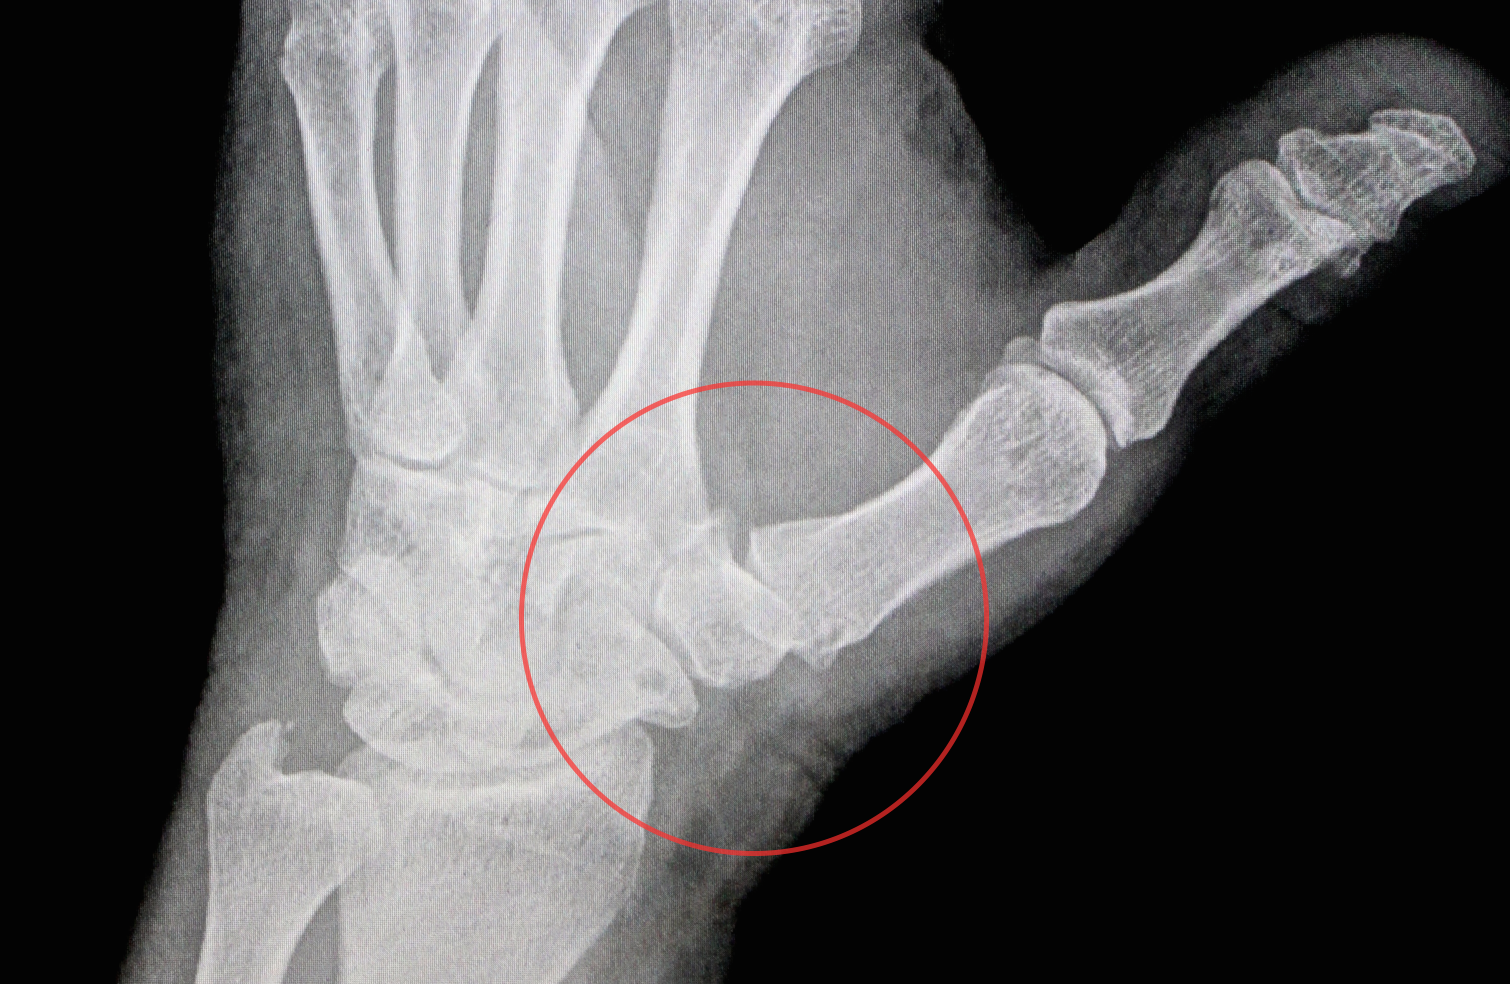 Solutions for Thumb Arthritis? We Got ’em!